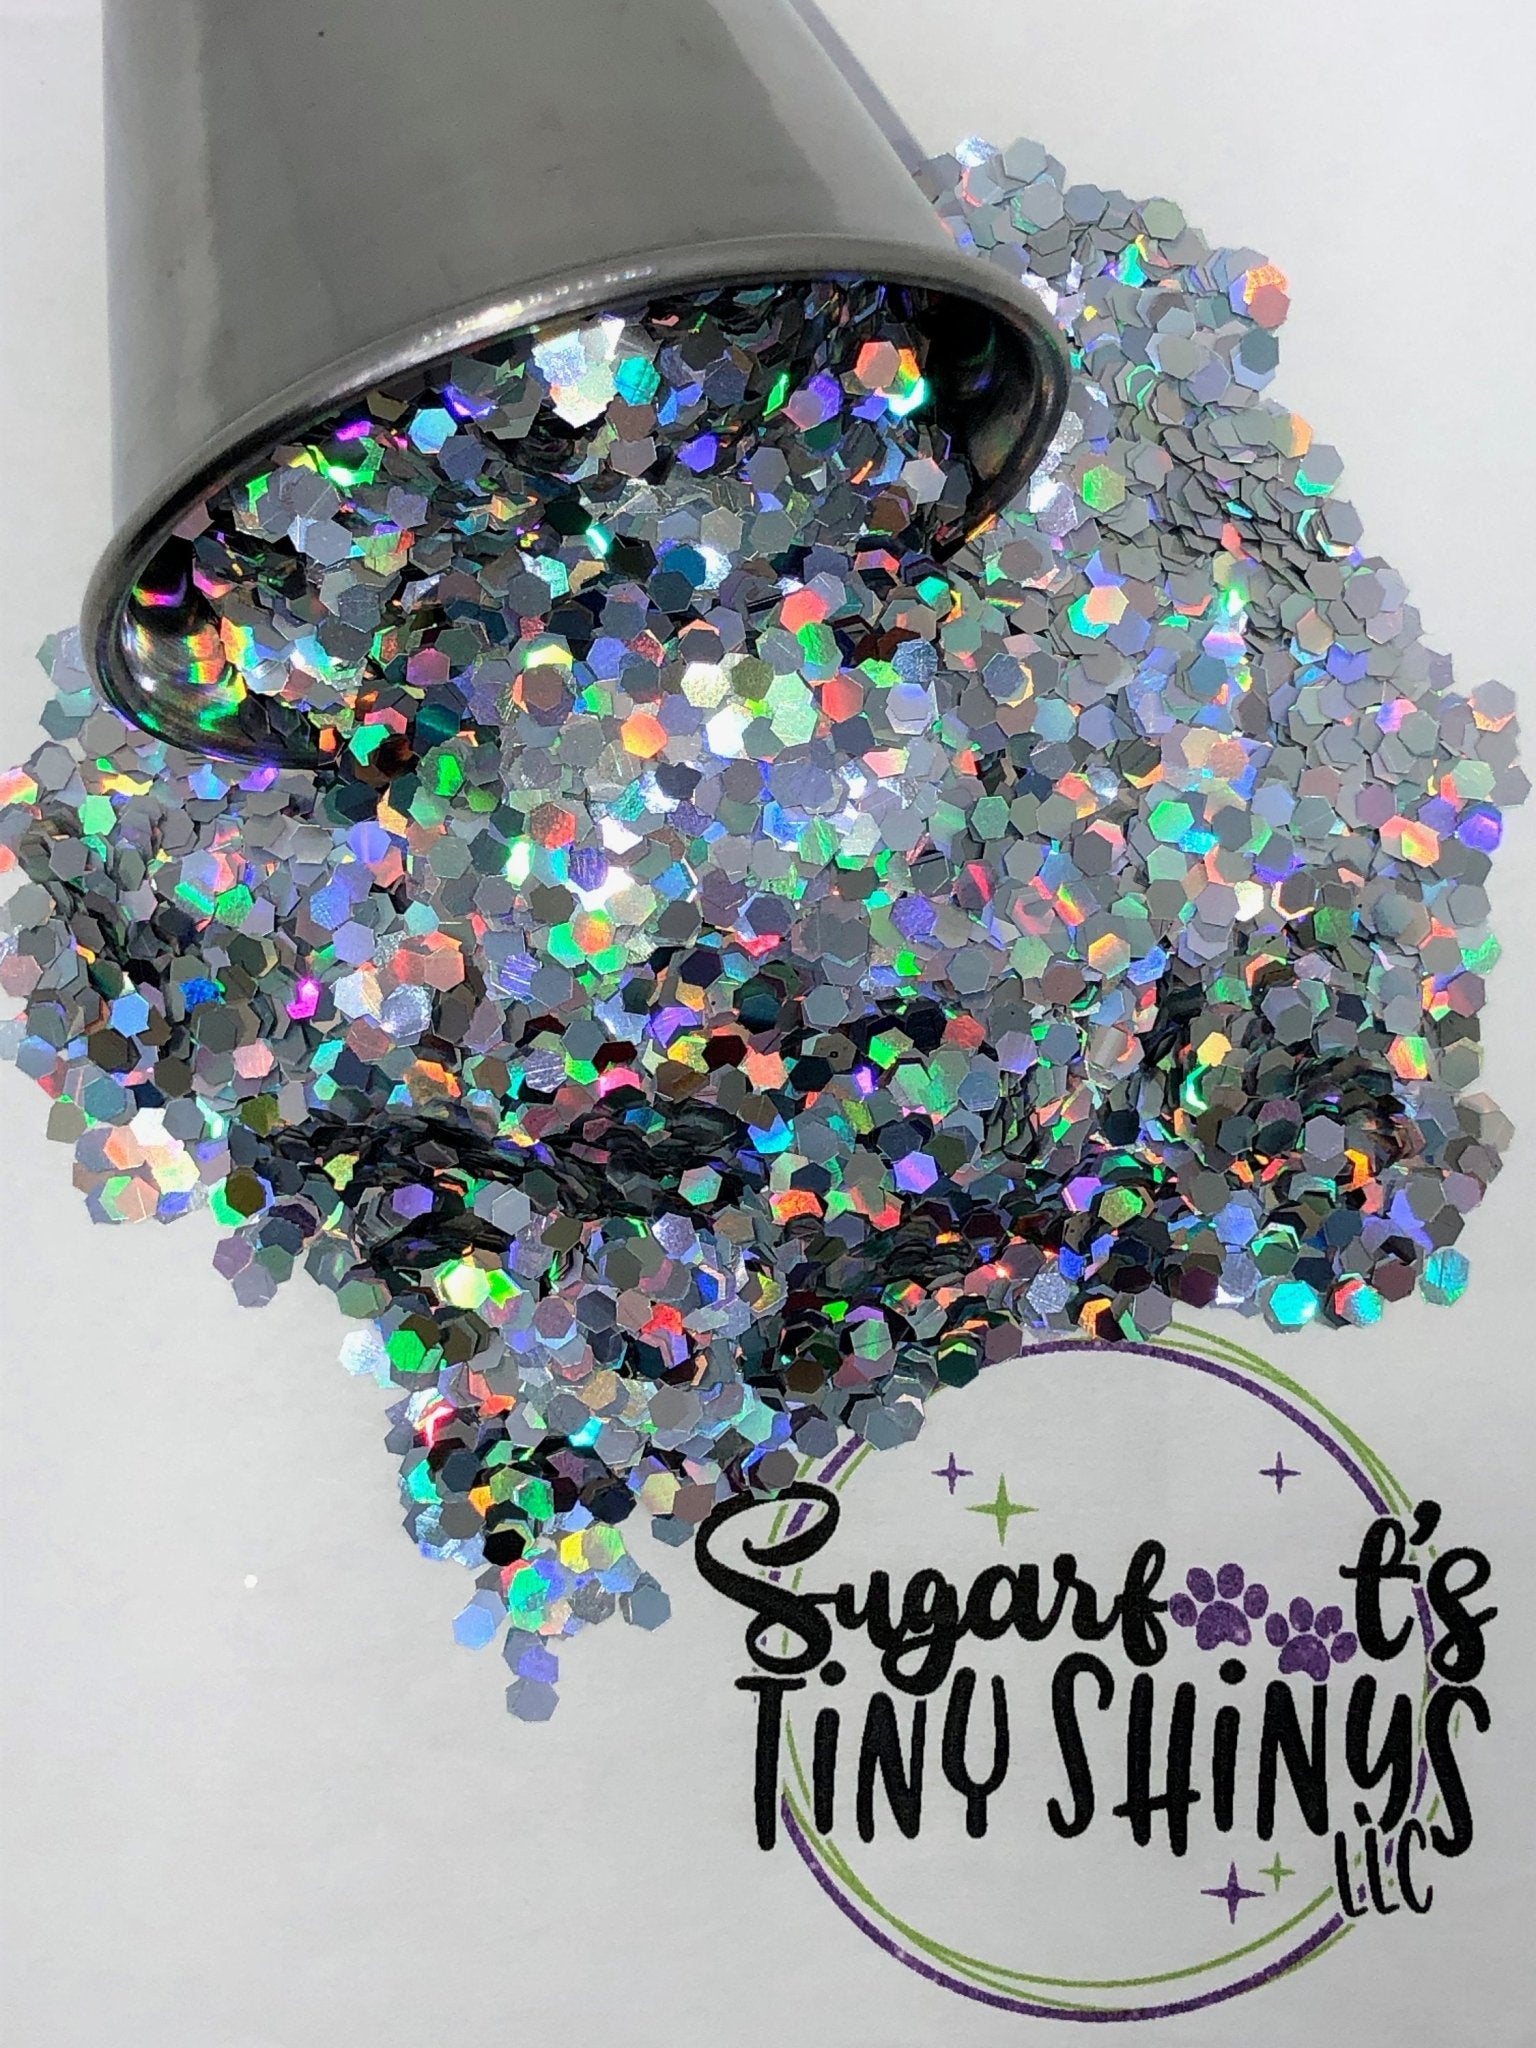 Chunky Silver - Sugarfoot's Tiny Shinys, LLC